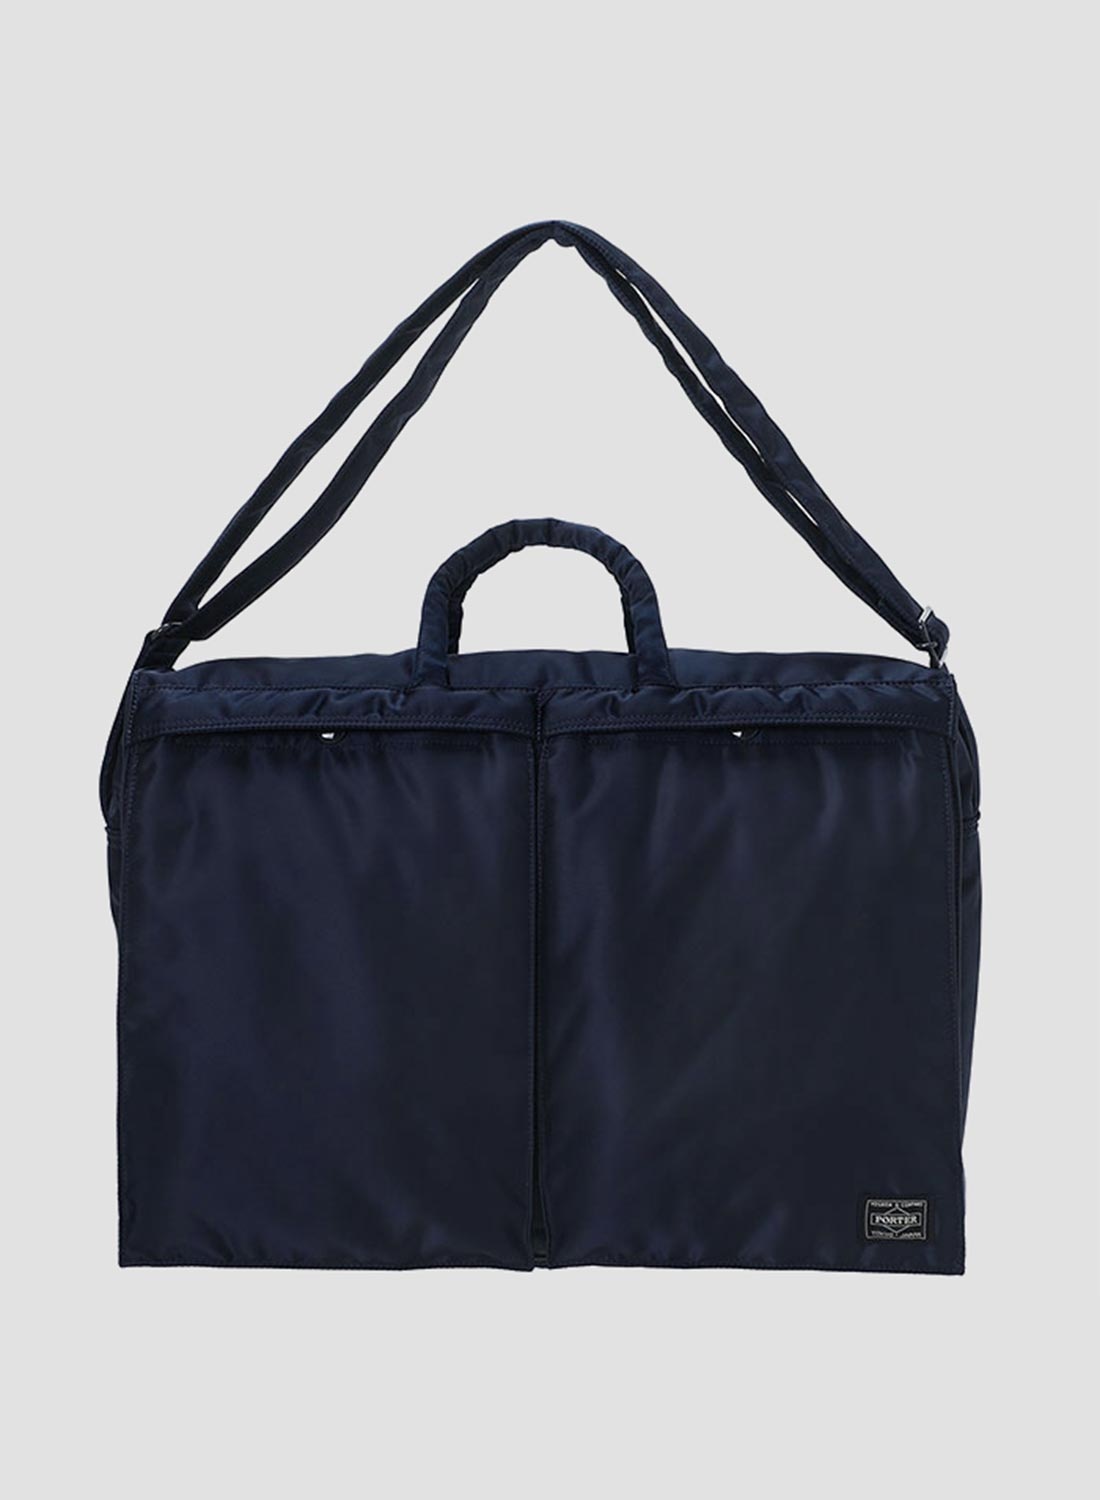 Porter-Yoshida & Co Tanker 2Way Shoulder Bag in Iron Blue - 2